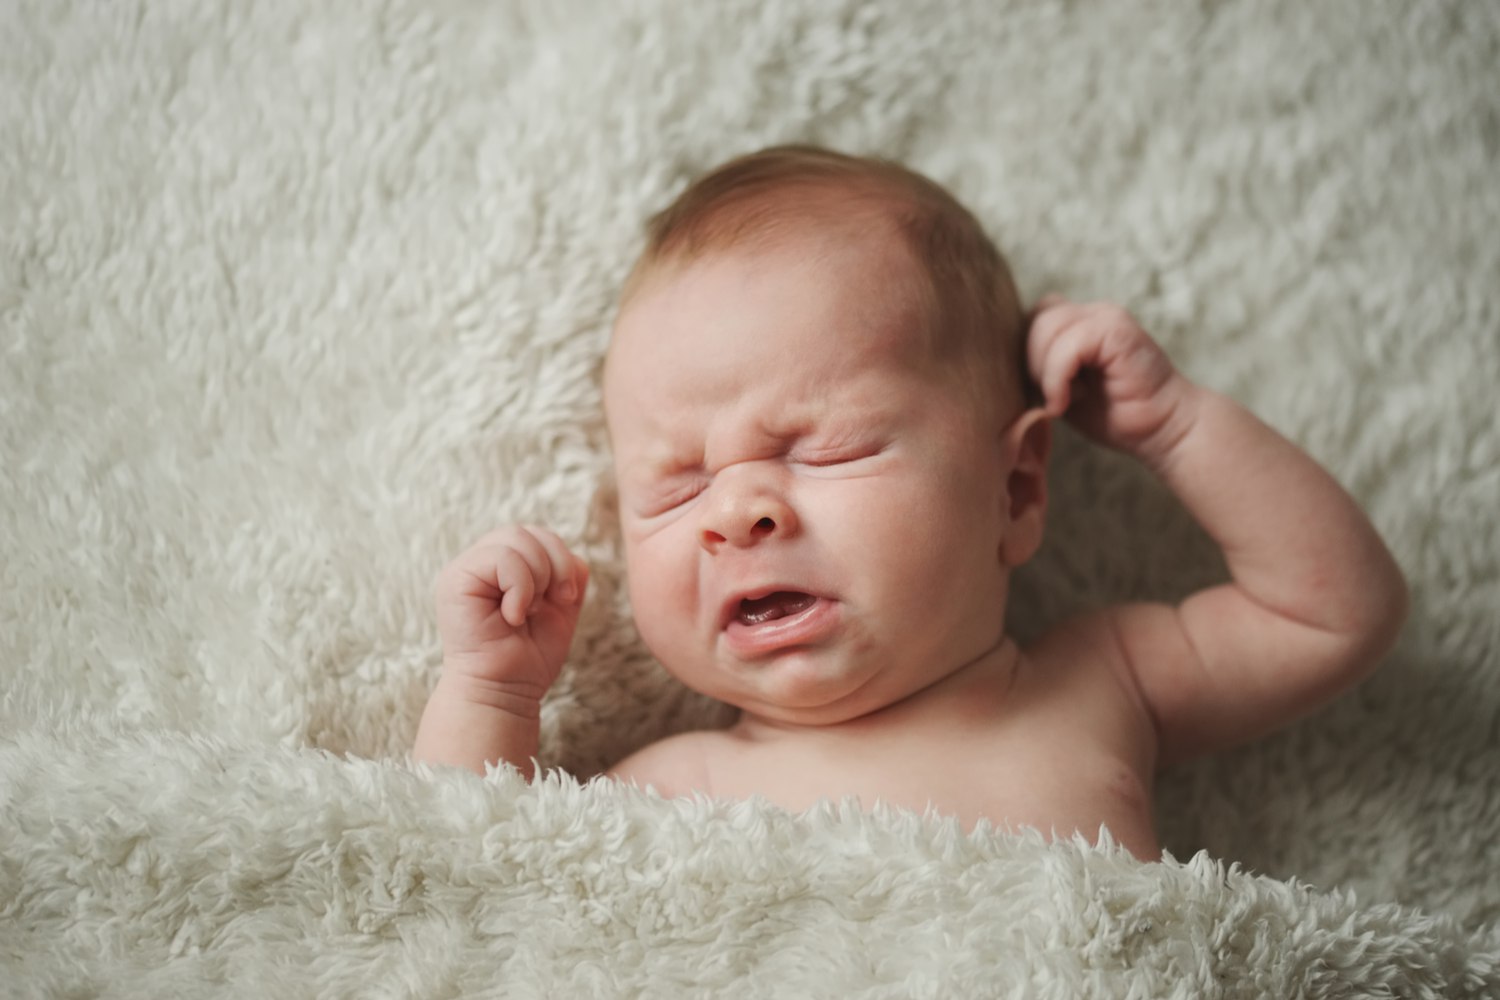 Symptoms of Breathing Difficulty in Babies